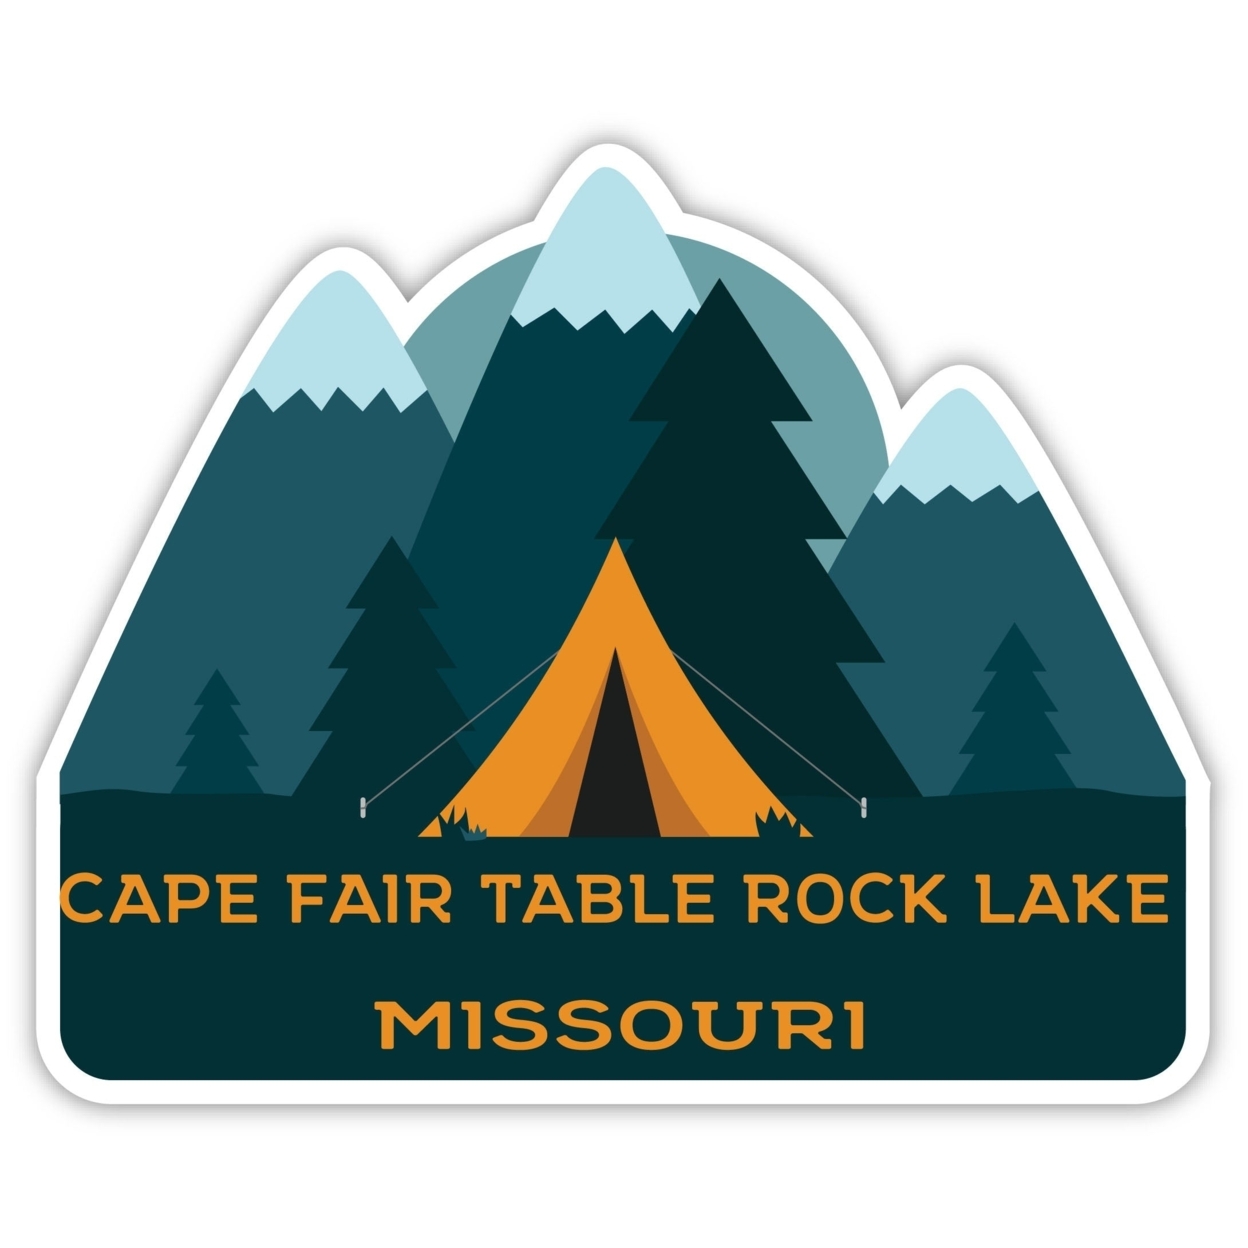 Cape Fair Table Rock Lake Missouri Souvenir Decorative Stickers (Choose Theme And Size) - 4-Pack, 2-Inch, Tent